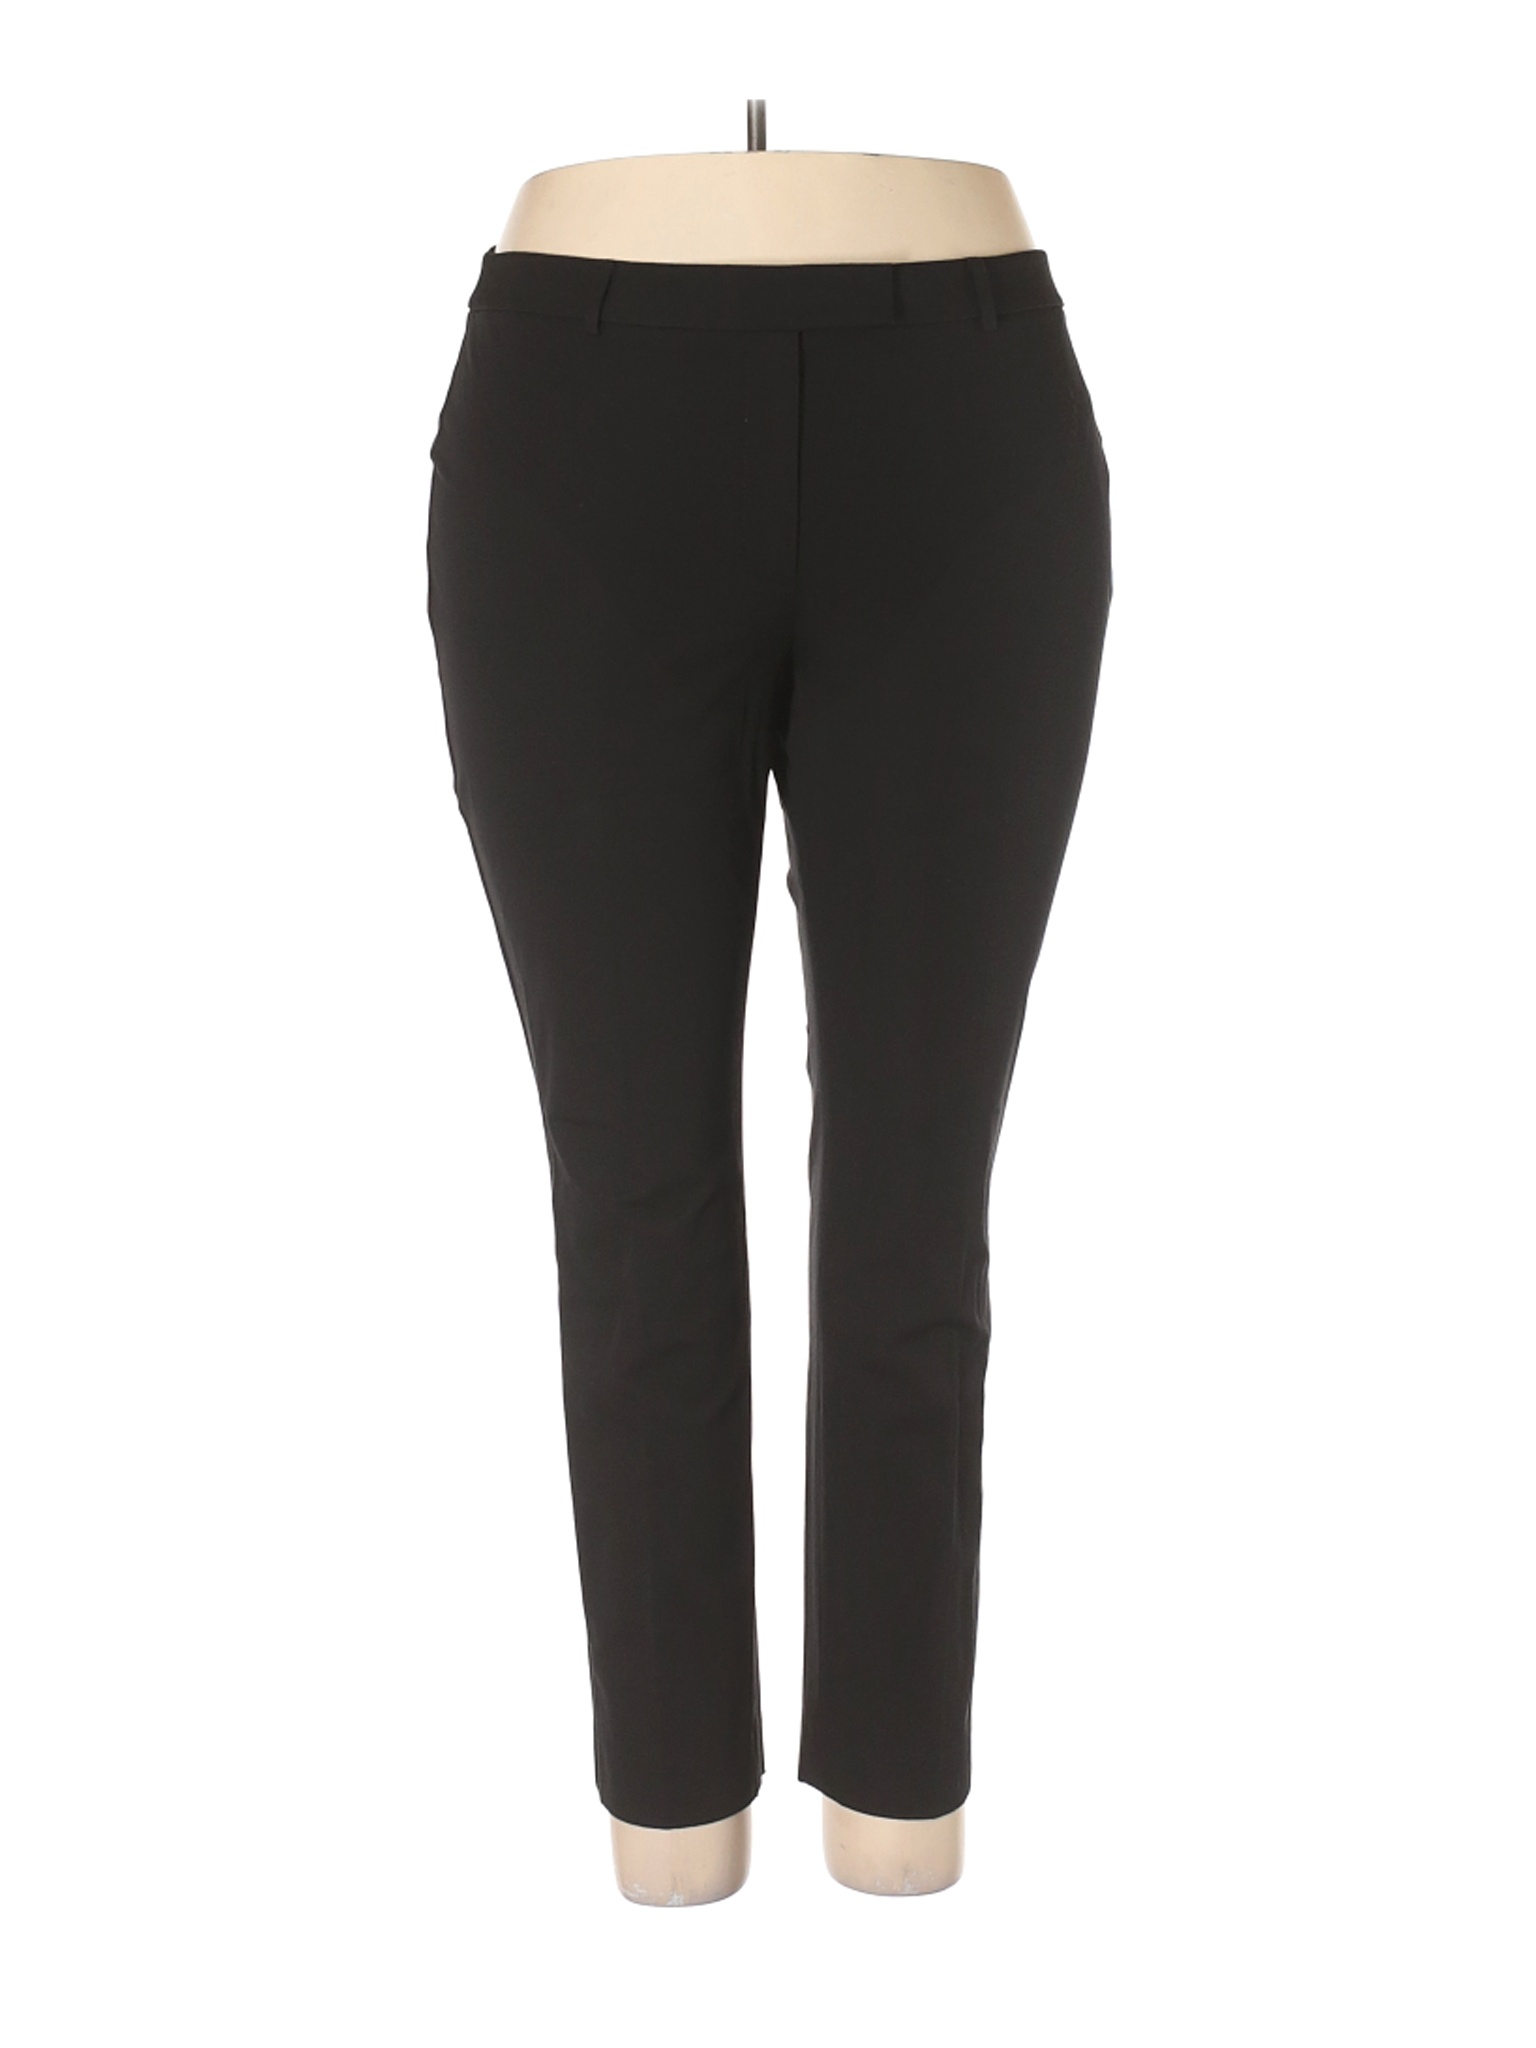 NWT Talbots Women Black Dress Pants 18 Plus | eBay